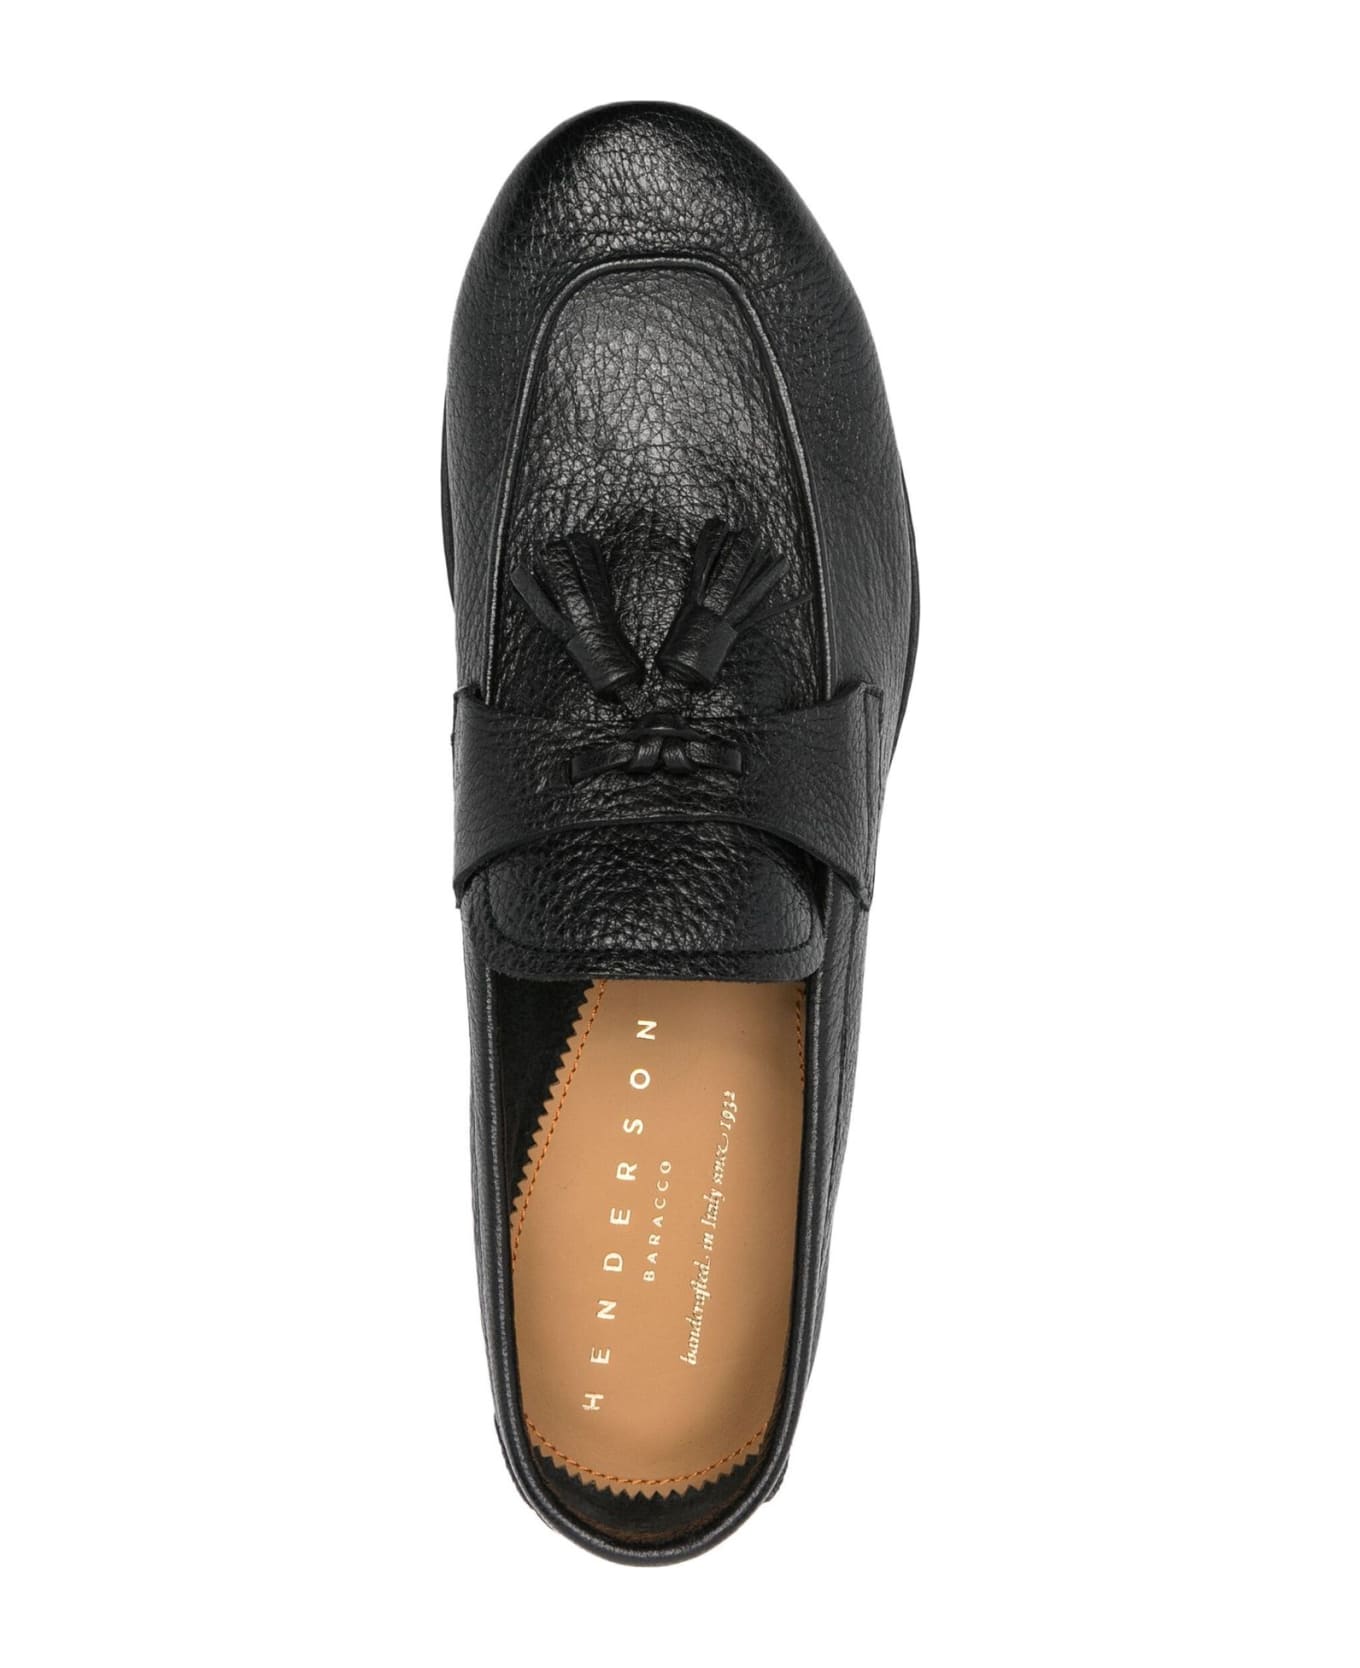 Henderson Baracco Henderson Flat Shoes Black - Black